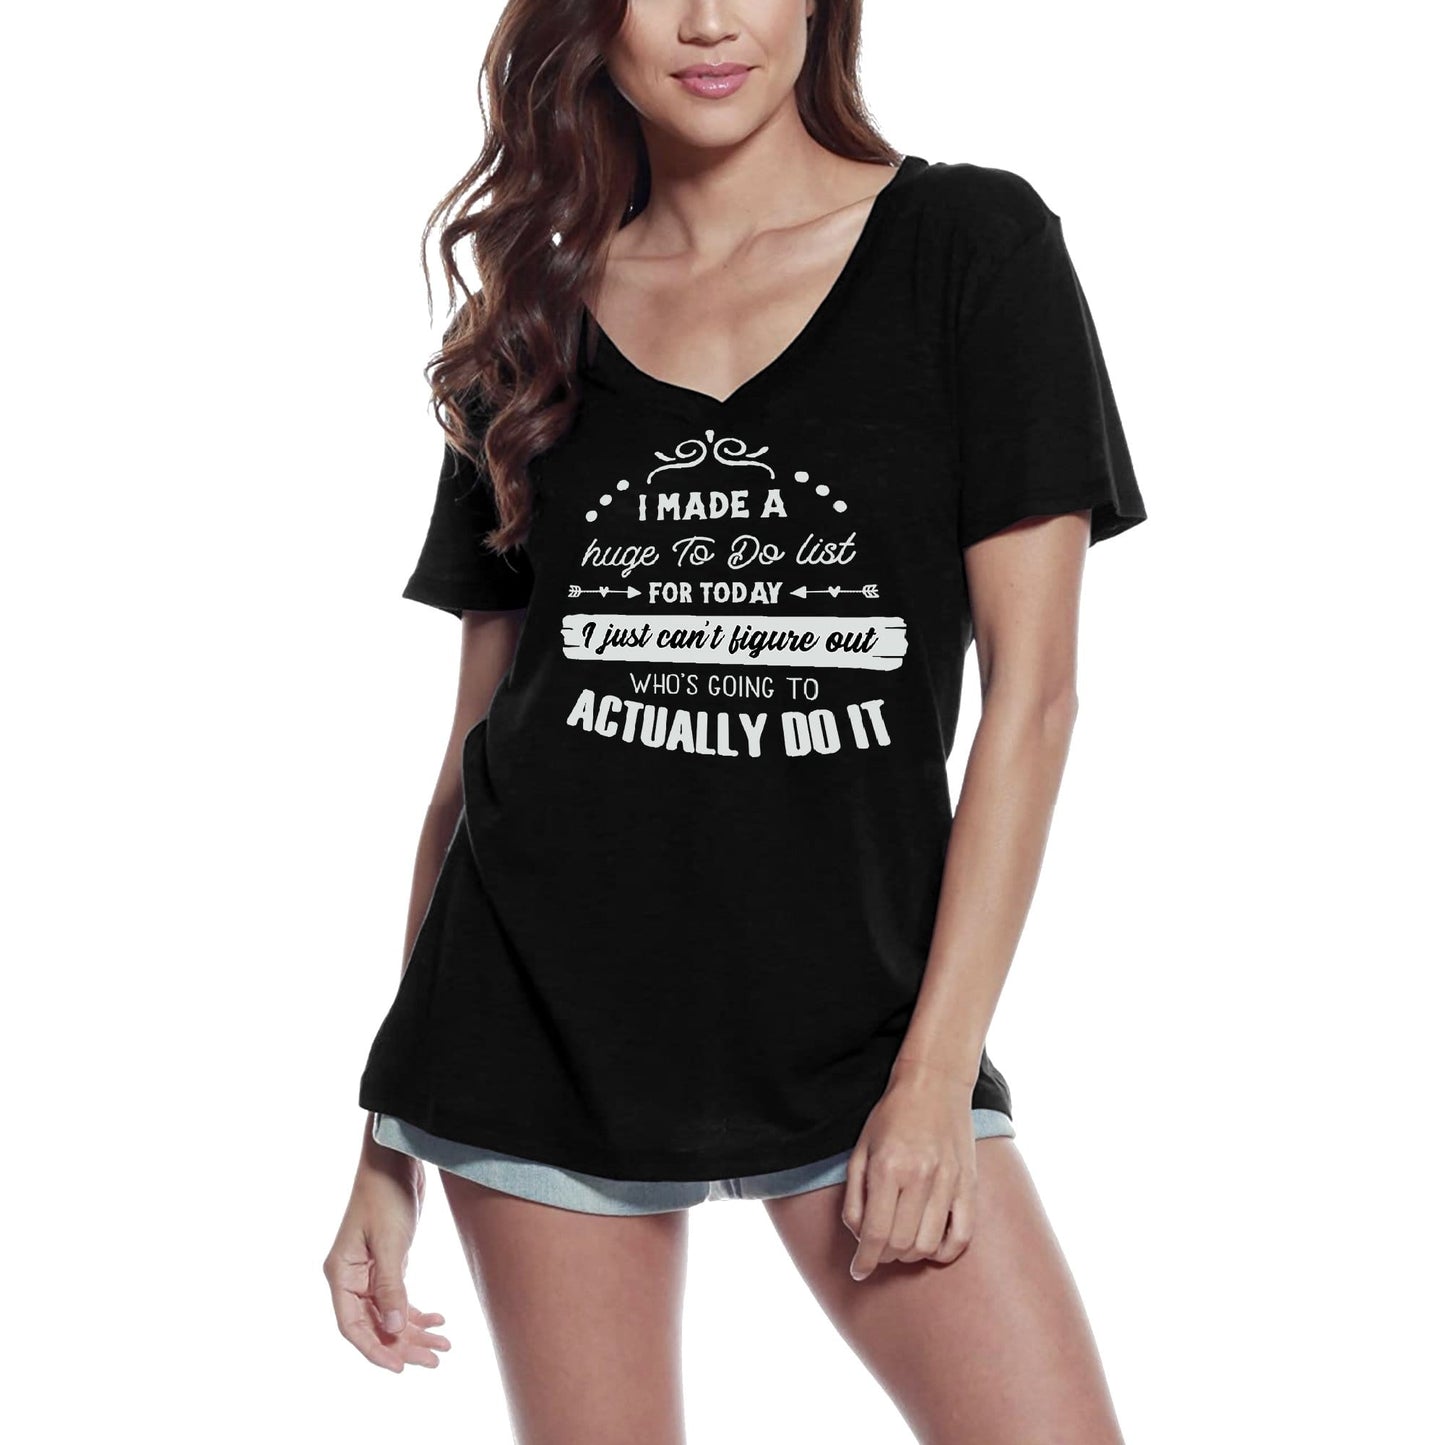 ULTRABASIC Women's T-Shirt I Made a Huge To Do List - Funny Short Sleeve Tee Shirt Tops